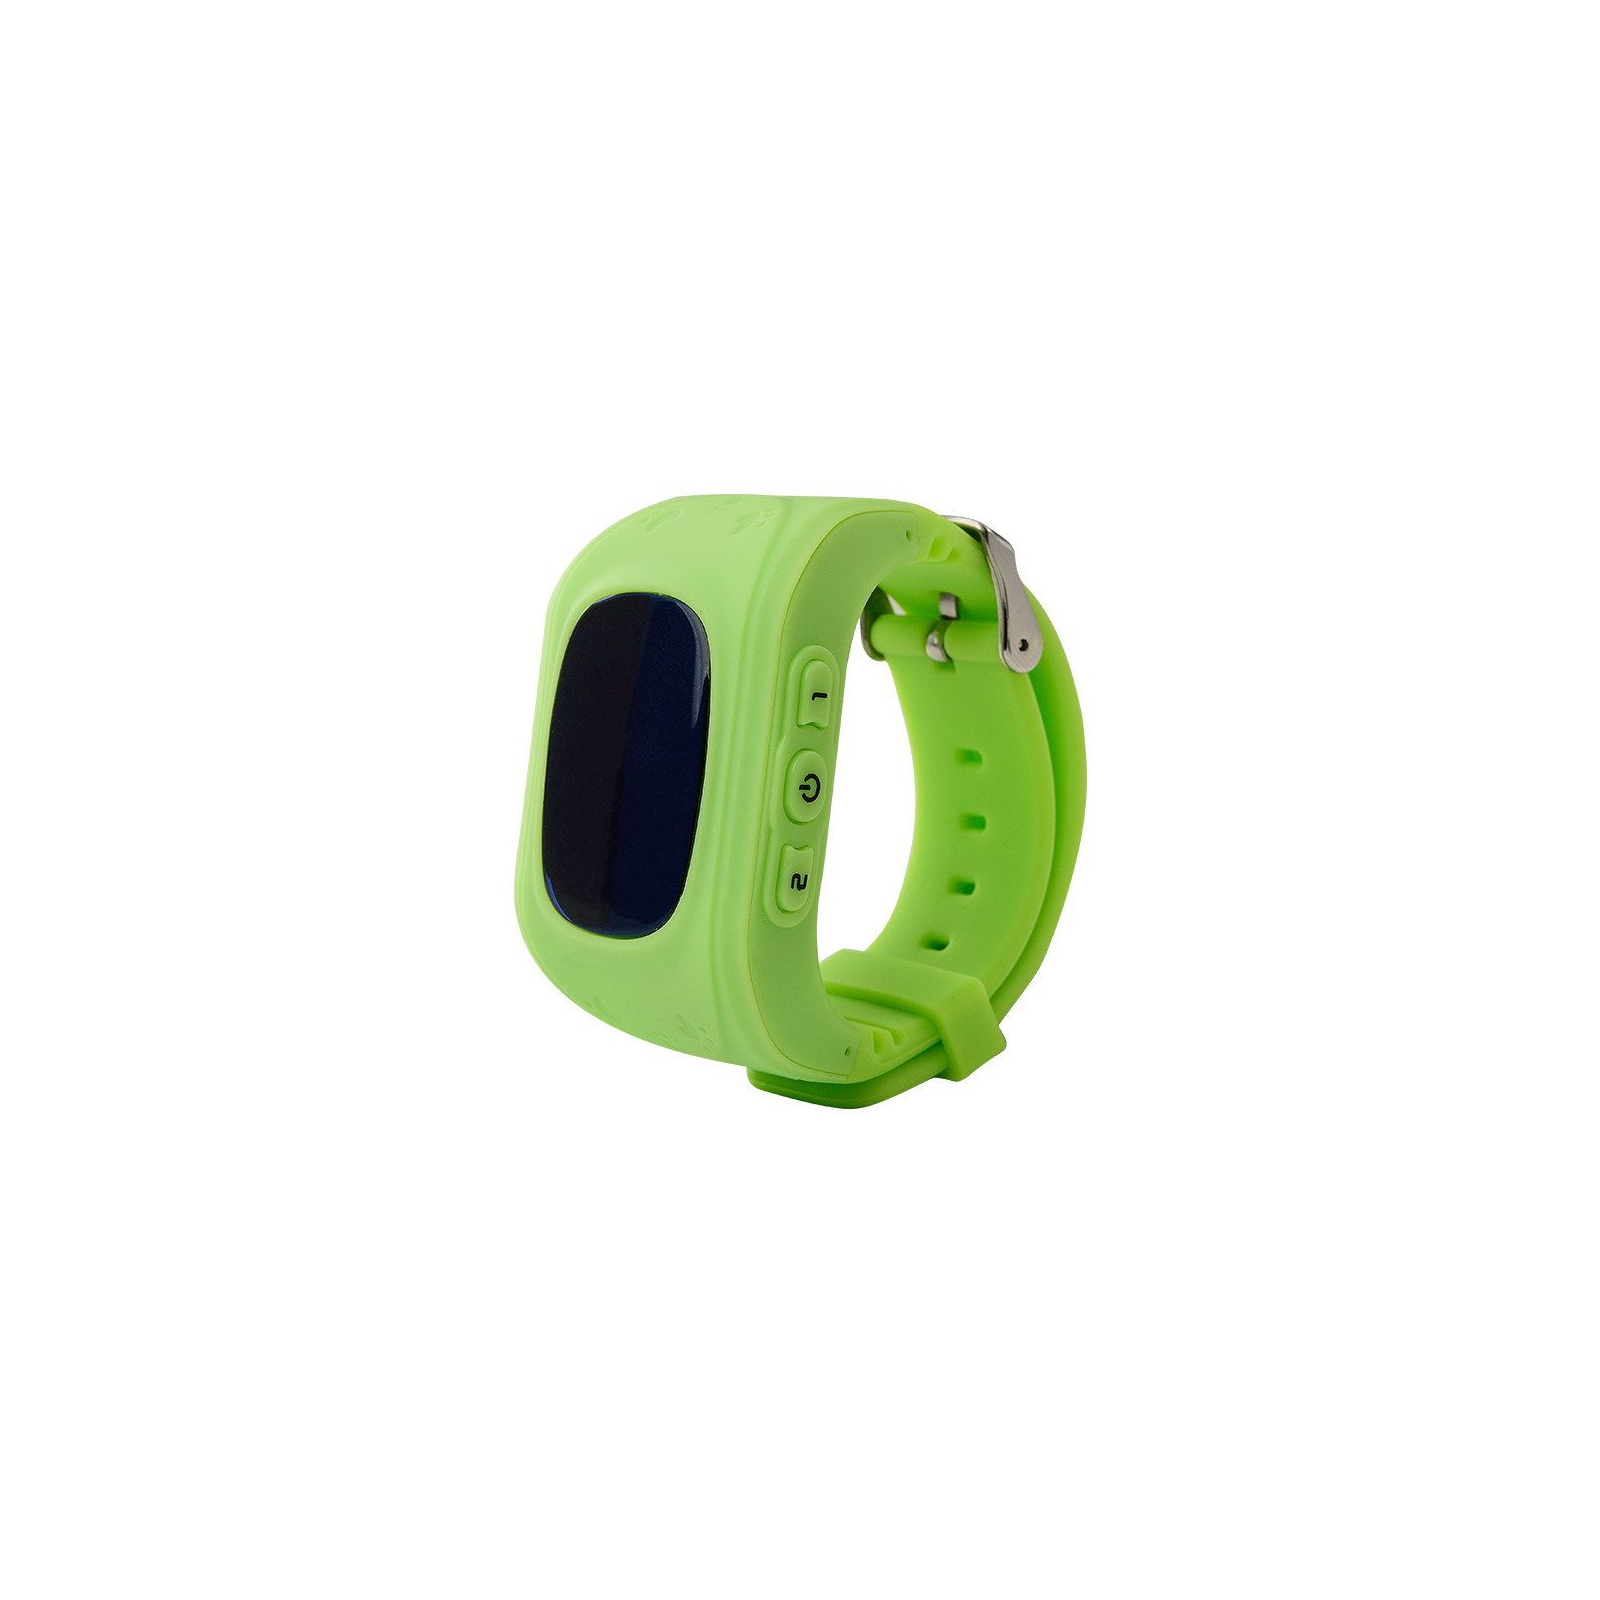 Смарт-часы UWatch Q50 Kid smart watch Dark Blue (F_50514) изображение 2